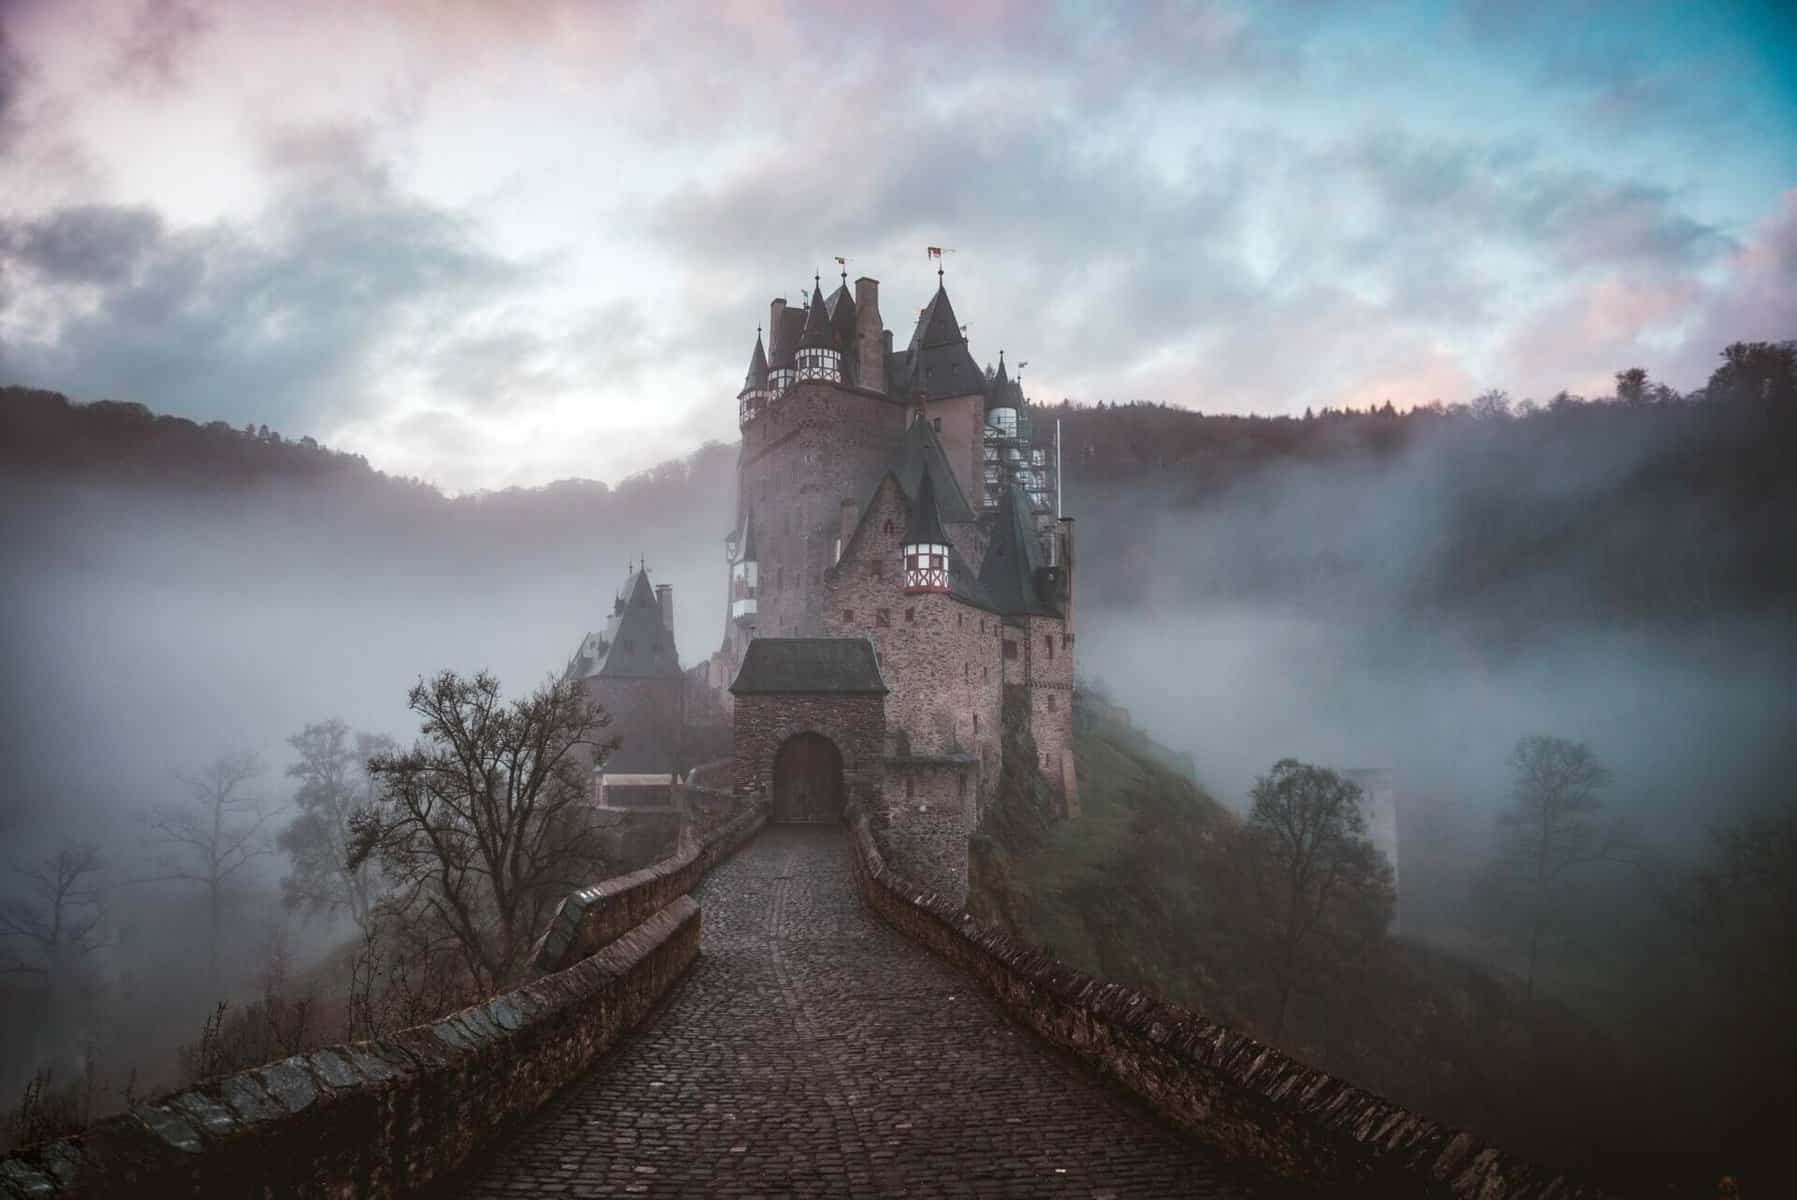 Gothic castle shrouded in mist